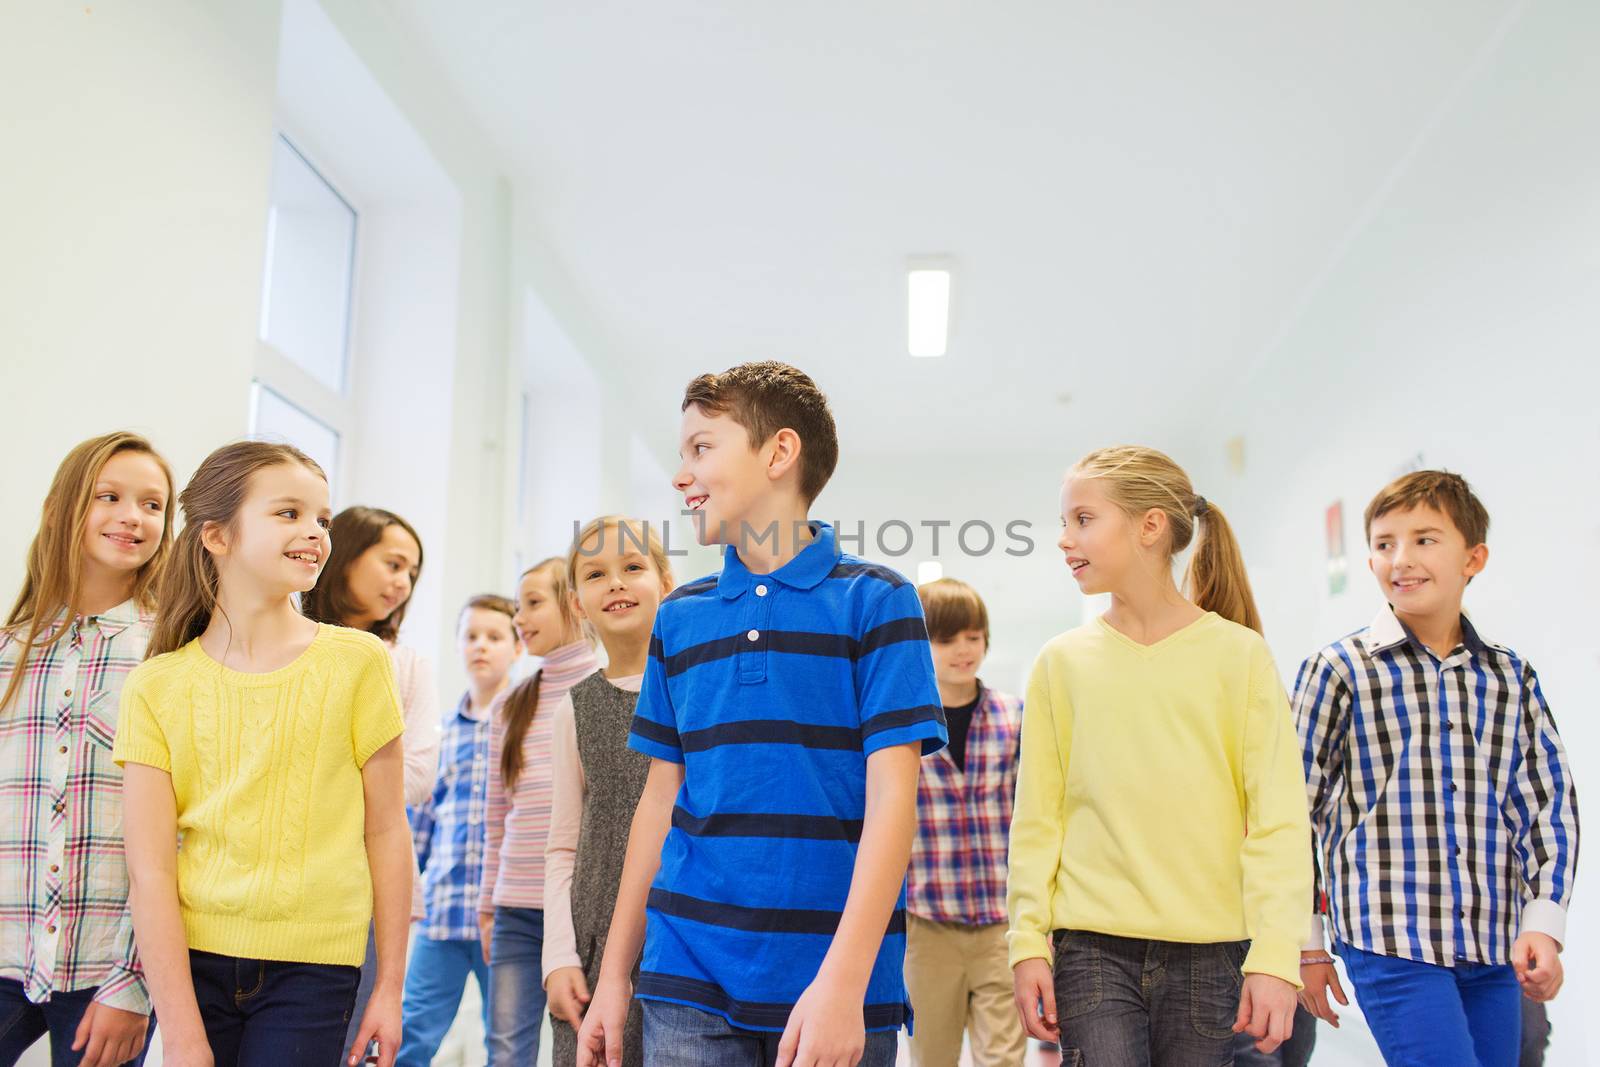 education, elementary school, drinks, children and people concept - group of smiling school kids walking in corridor